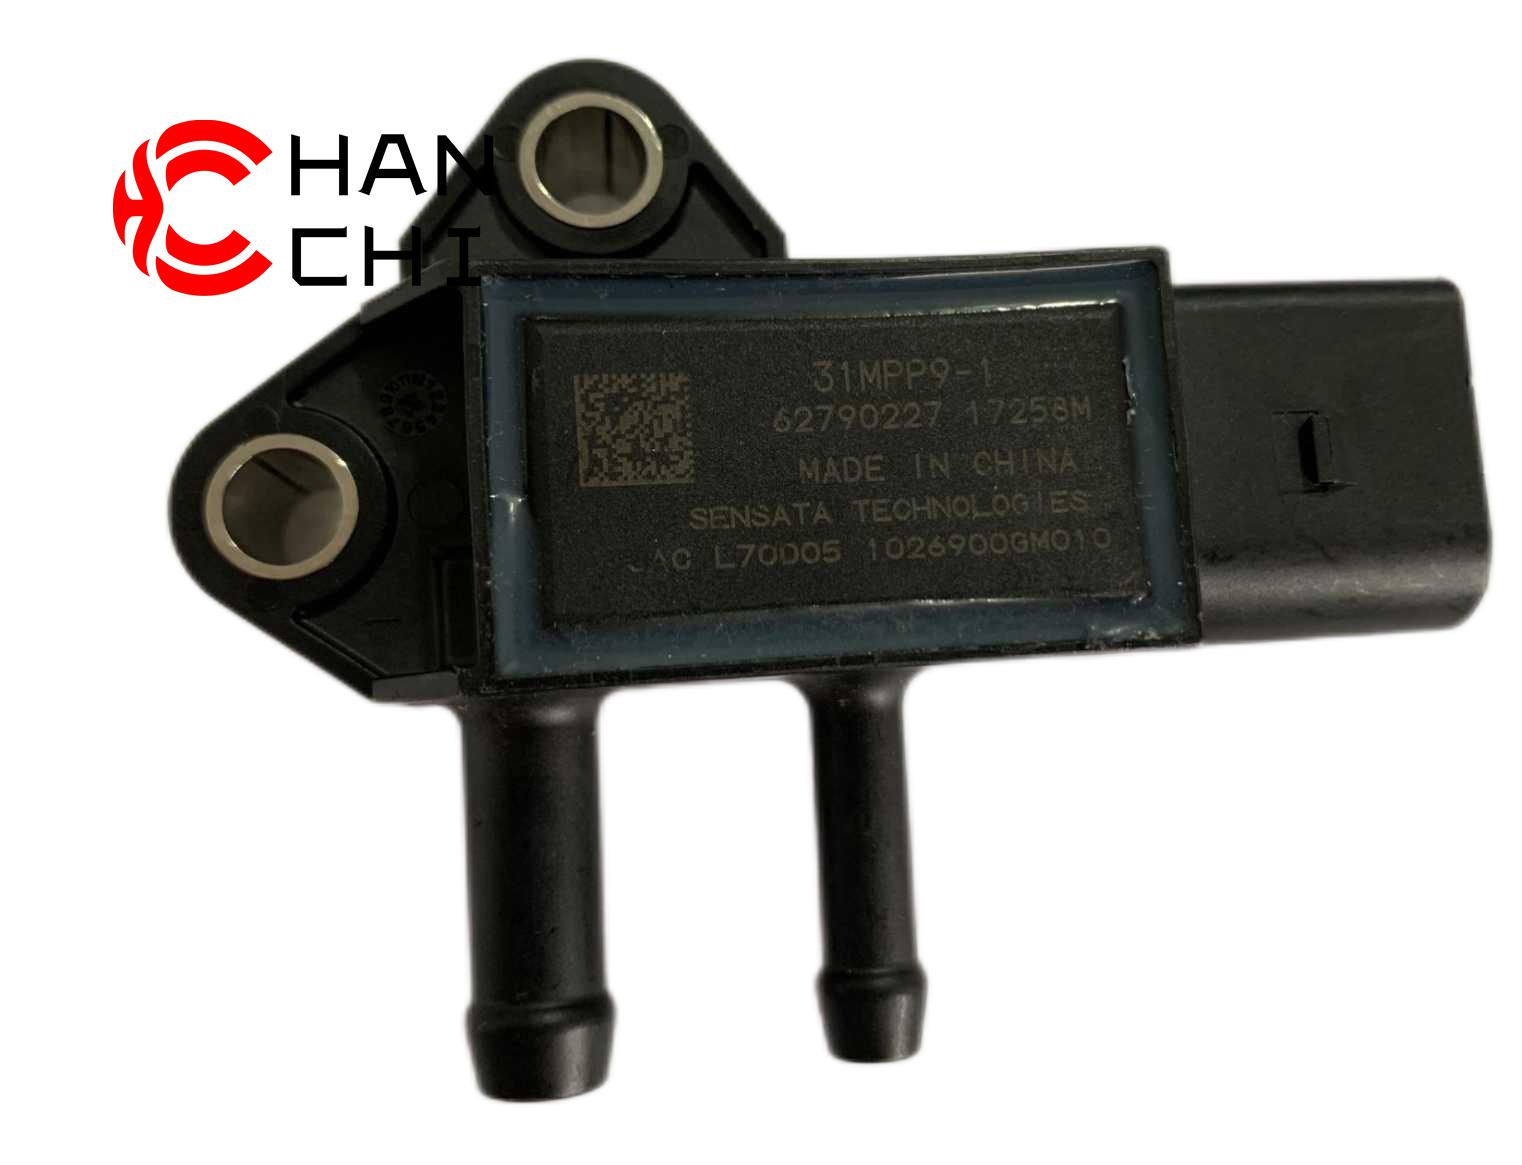 31MPP9-1 Diesel Particulate Filter Differential Pressure Sensor